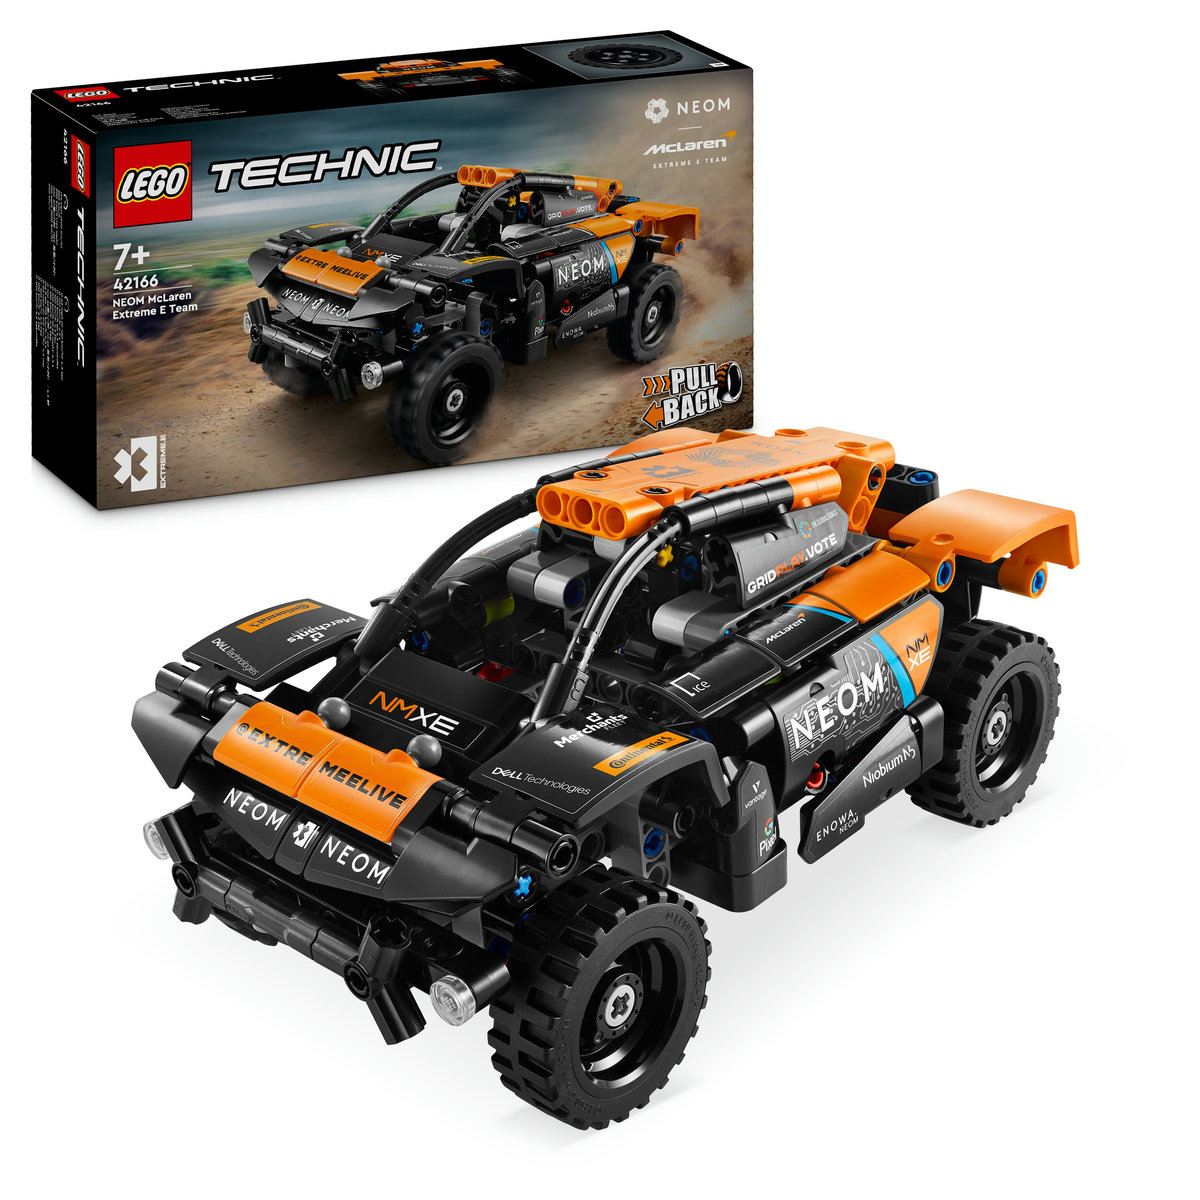 Lego Technic - Neon McLaren Extreme E Team (42166) | LEGO